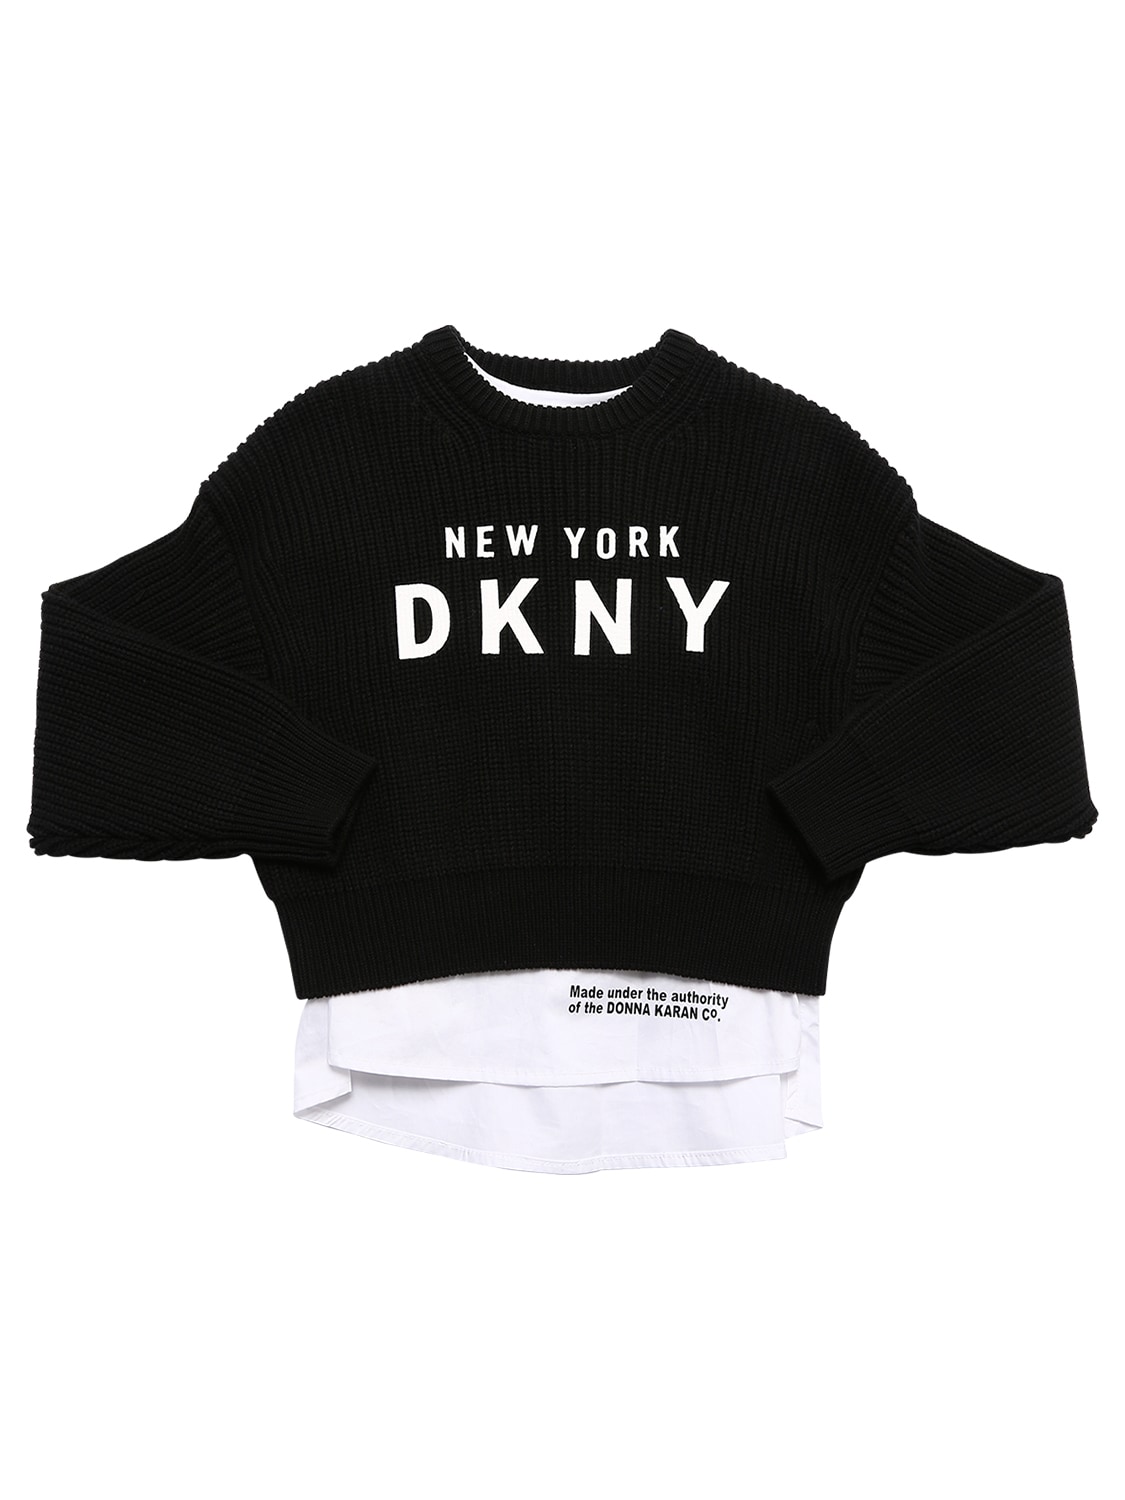 dkny black sweater